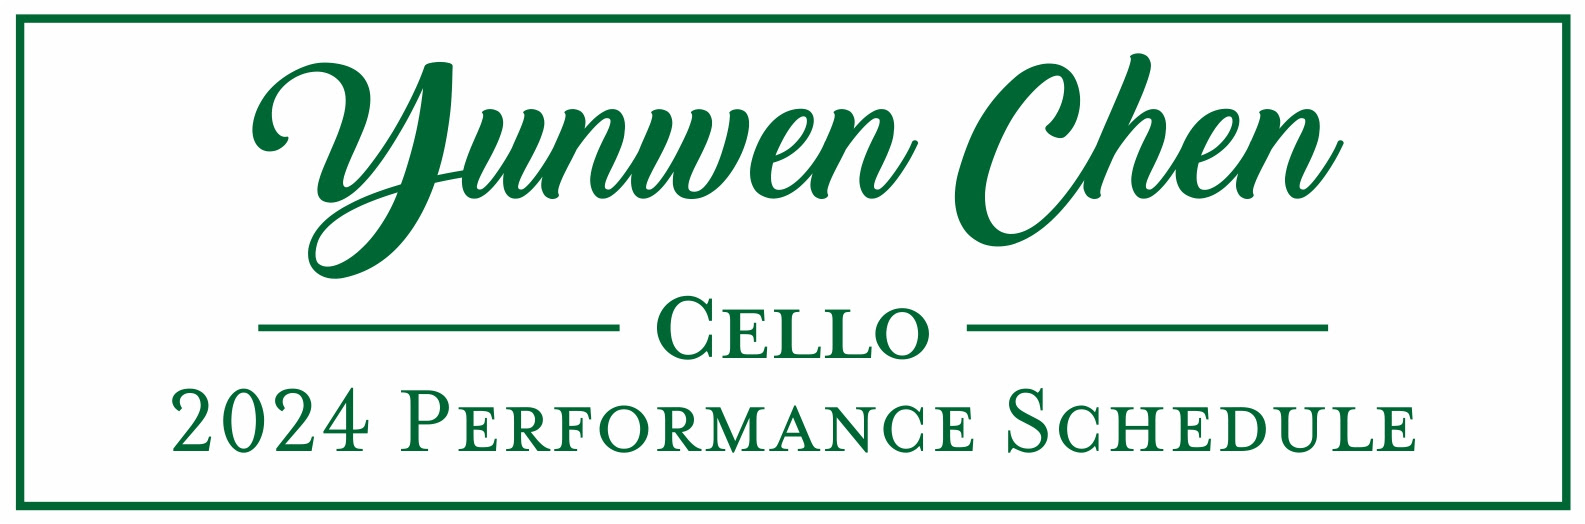 yunwen chen cello